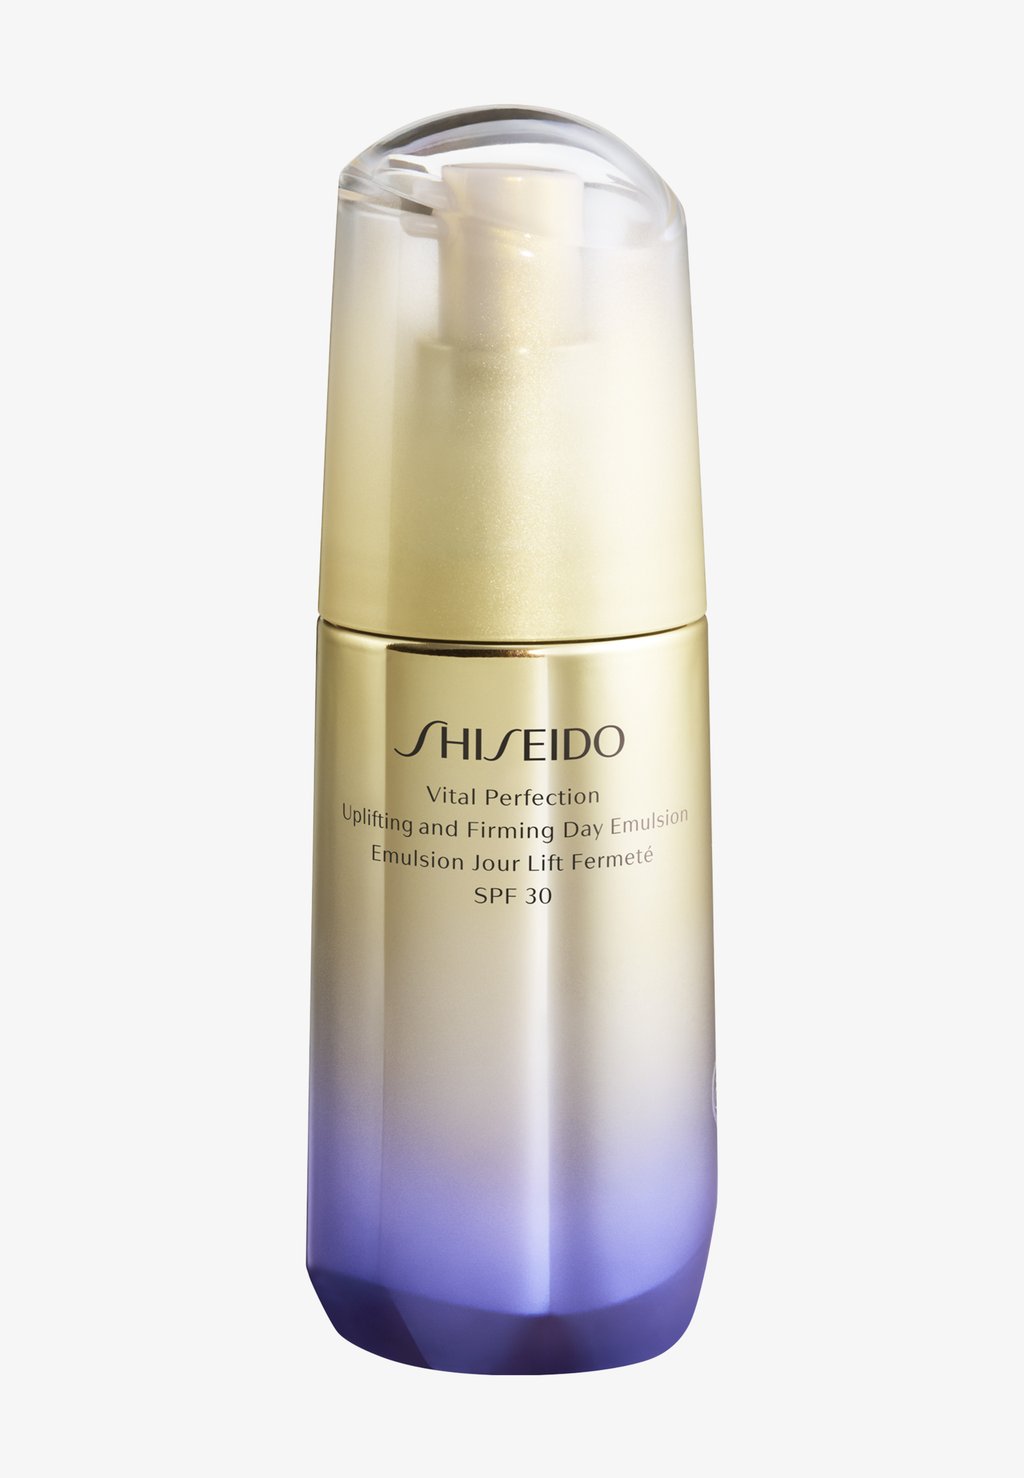 Дневной крем Vital Perfection Uplifting And Firming Day Emulsion Spf30 75Ml Shiseido